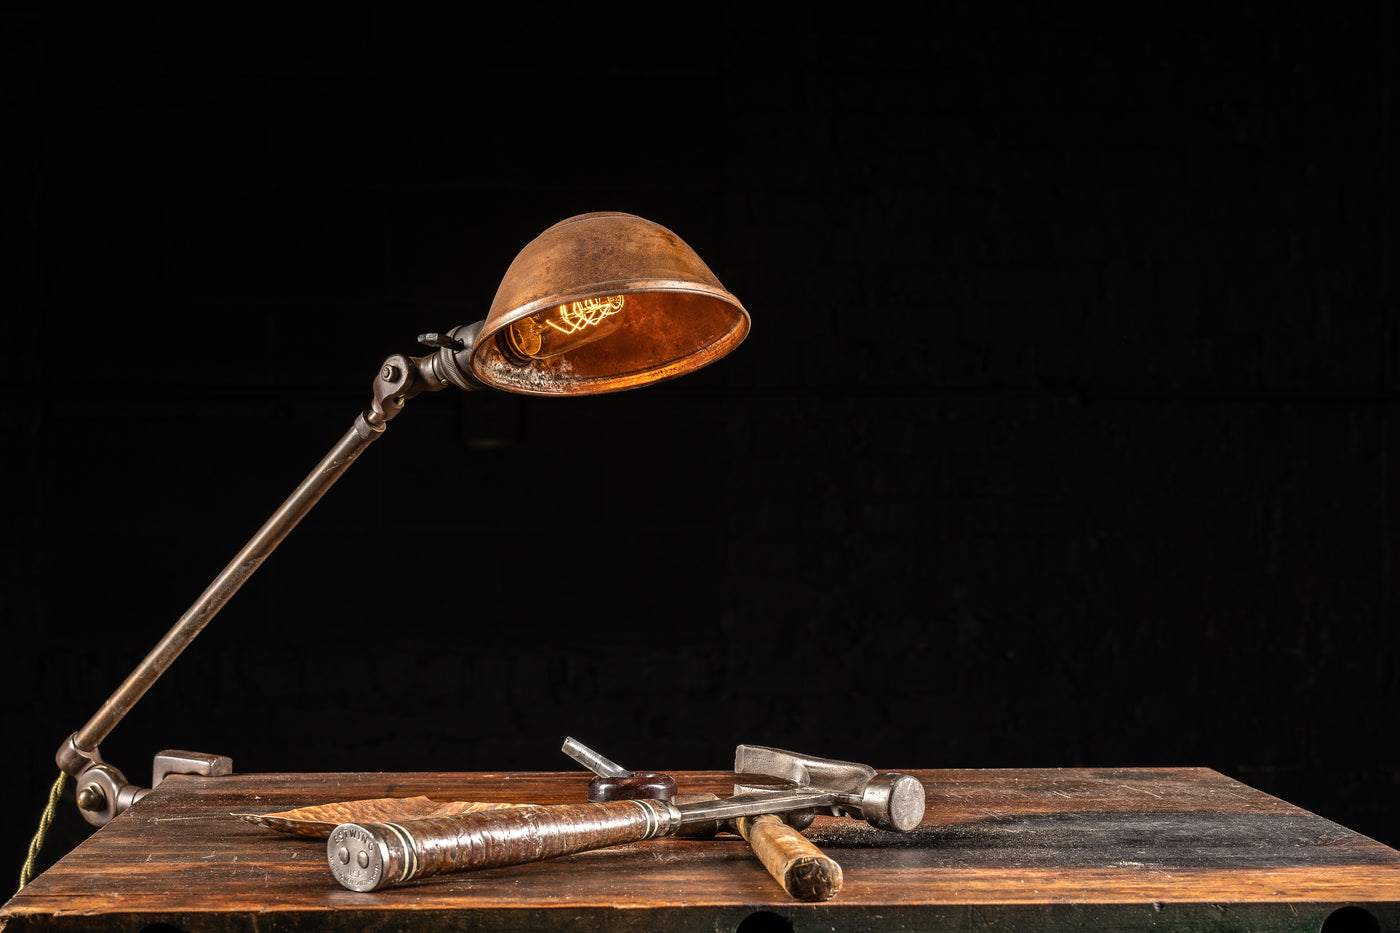 Vintage Industrial Adjustable Workbench Lamp